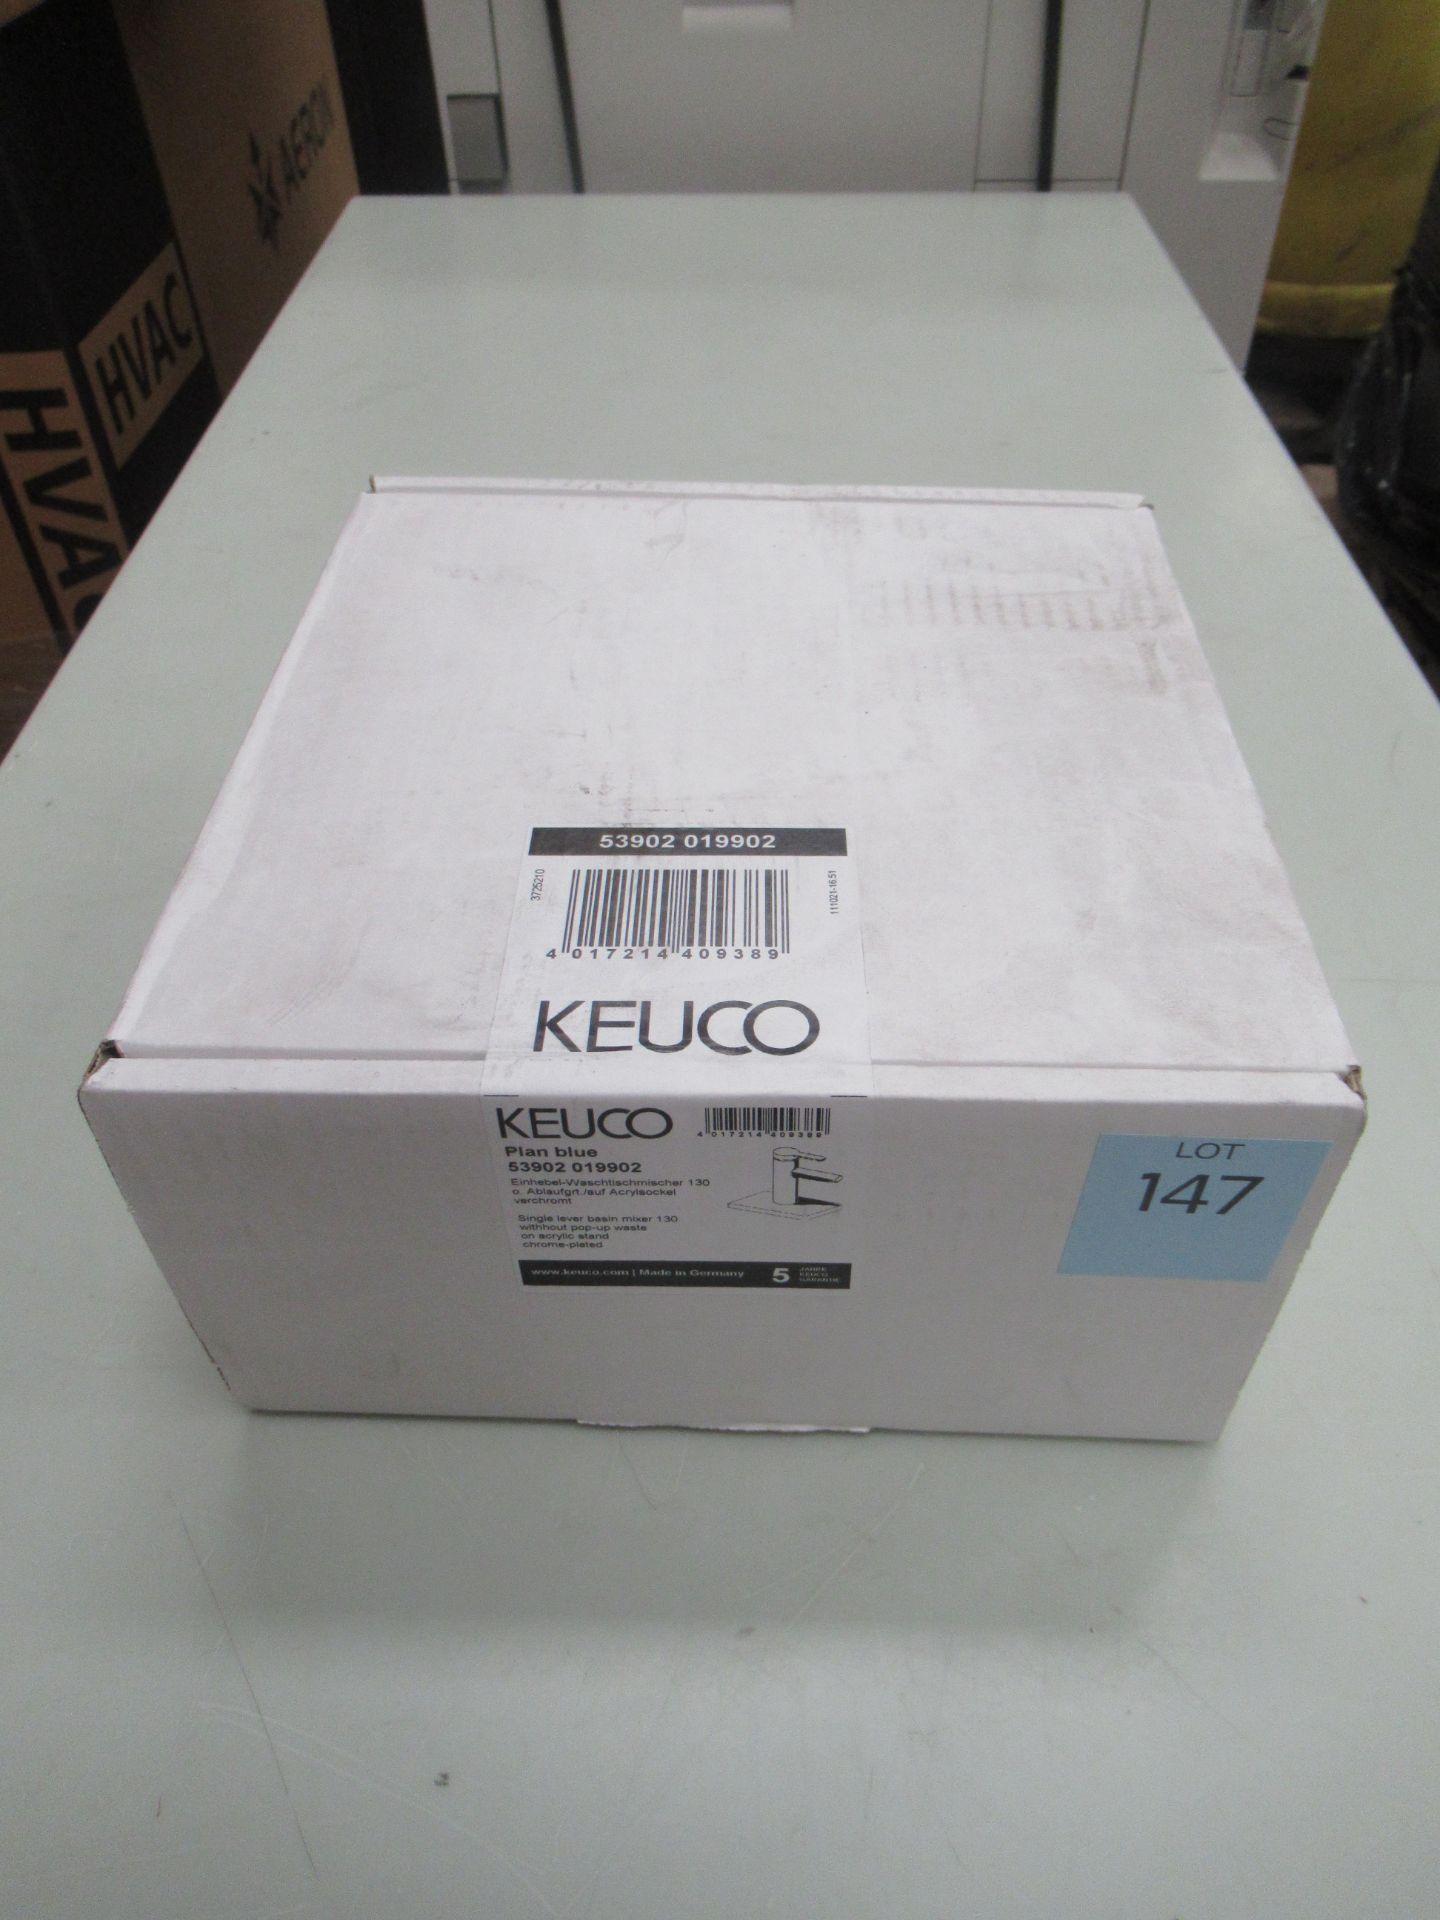 A Keuco Plan Blue - Single Lever Basin Mixer 130-Tap, Chrome Plated, P/N 53902-019902